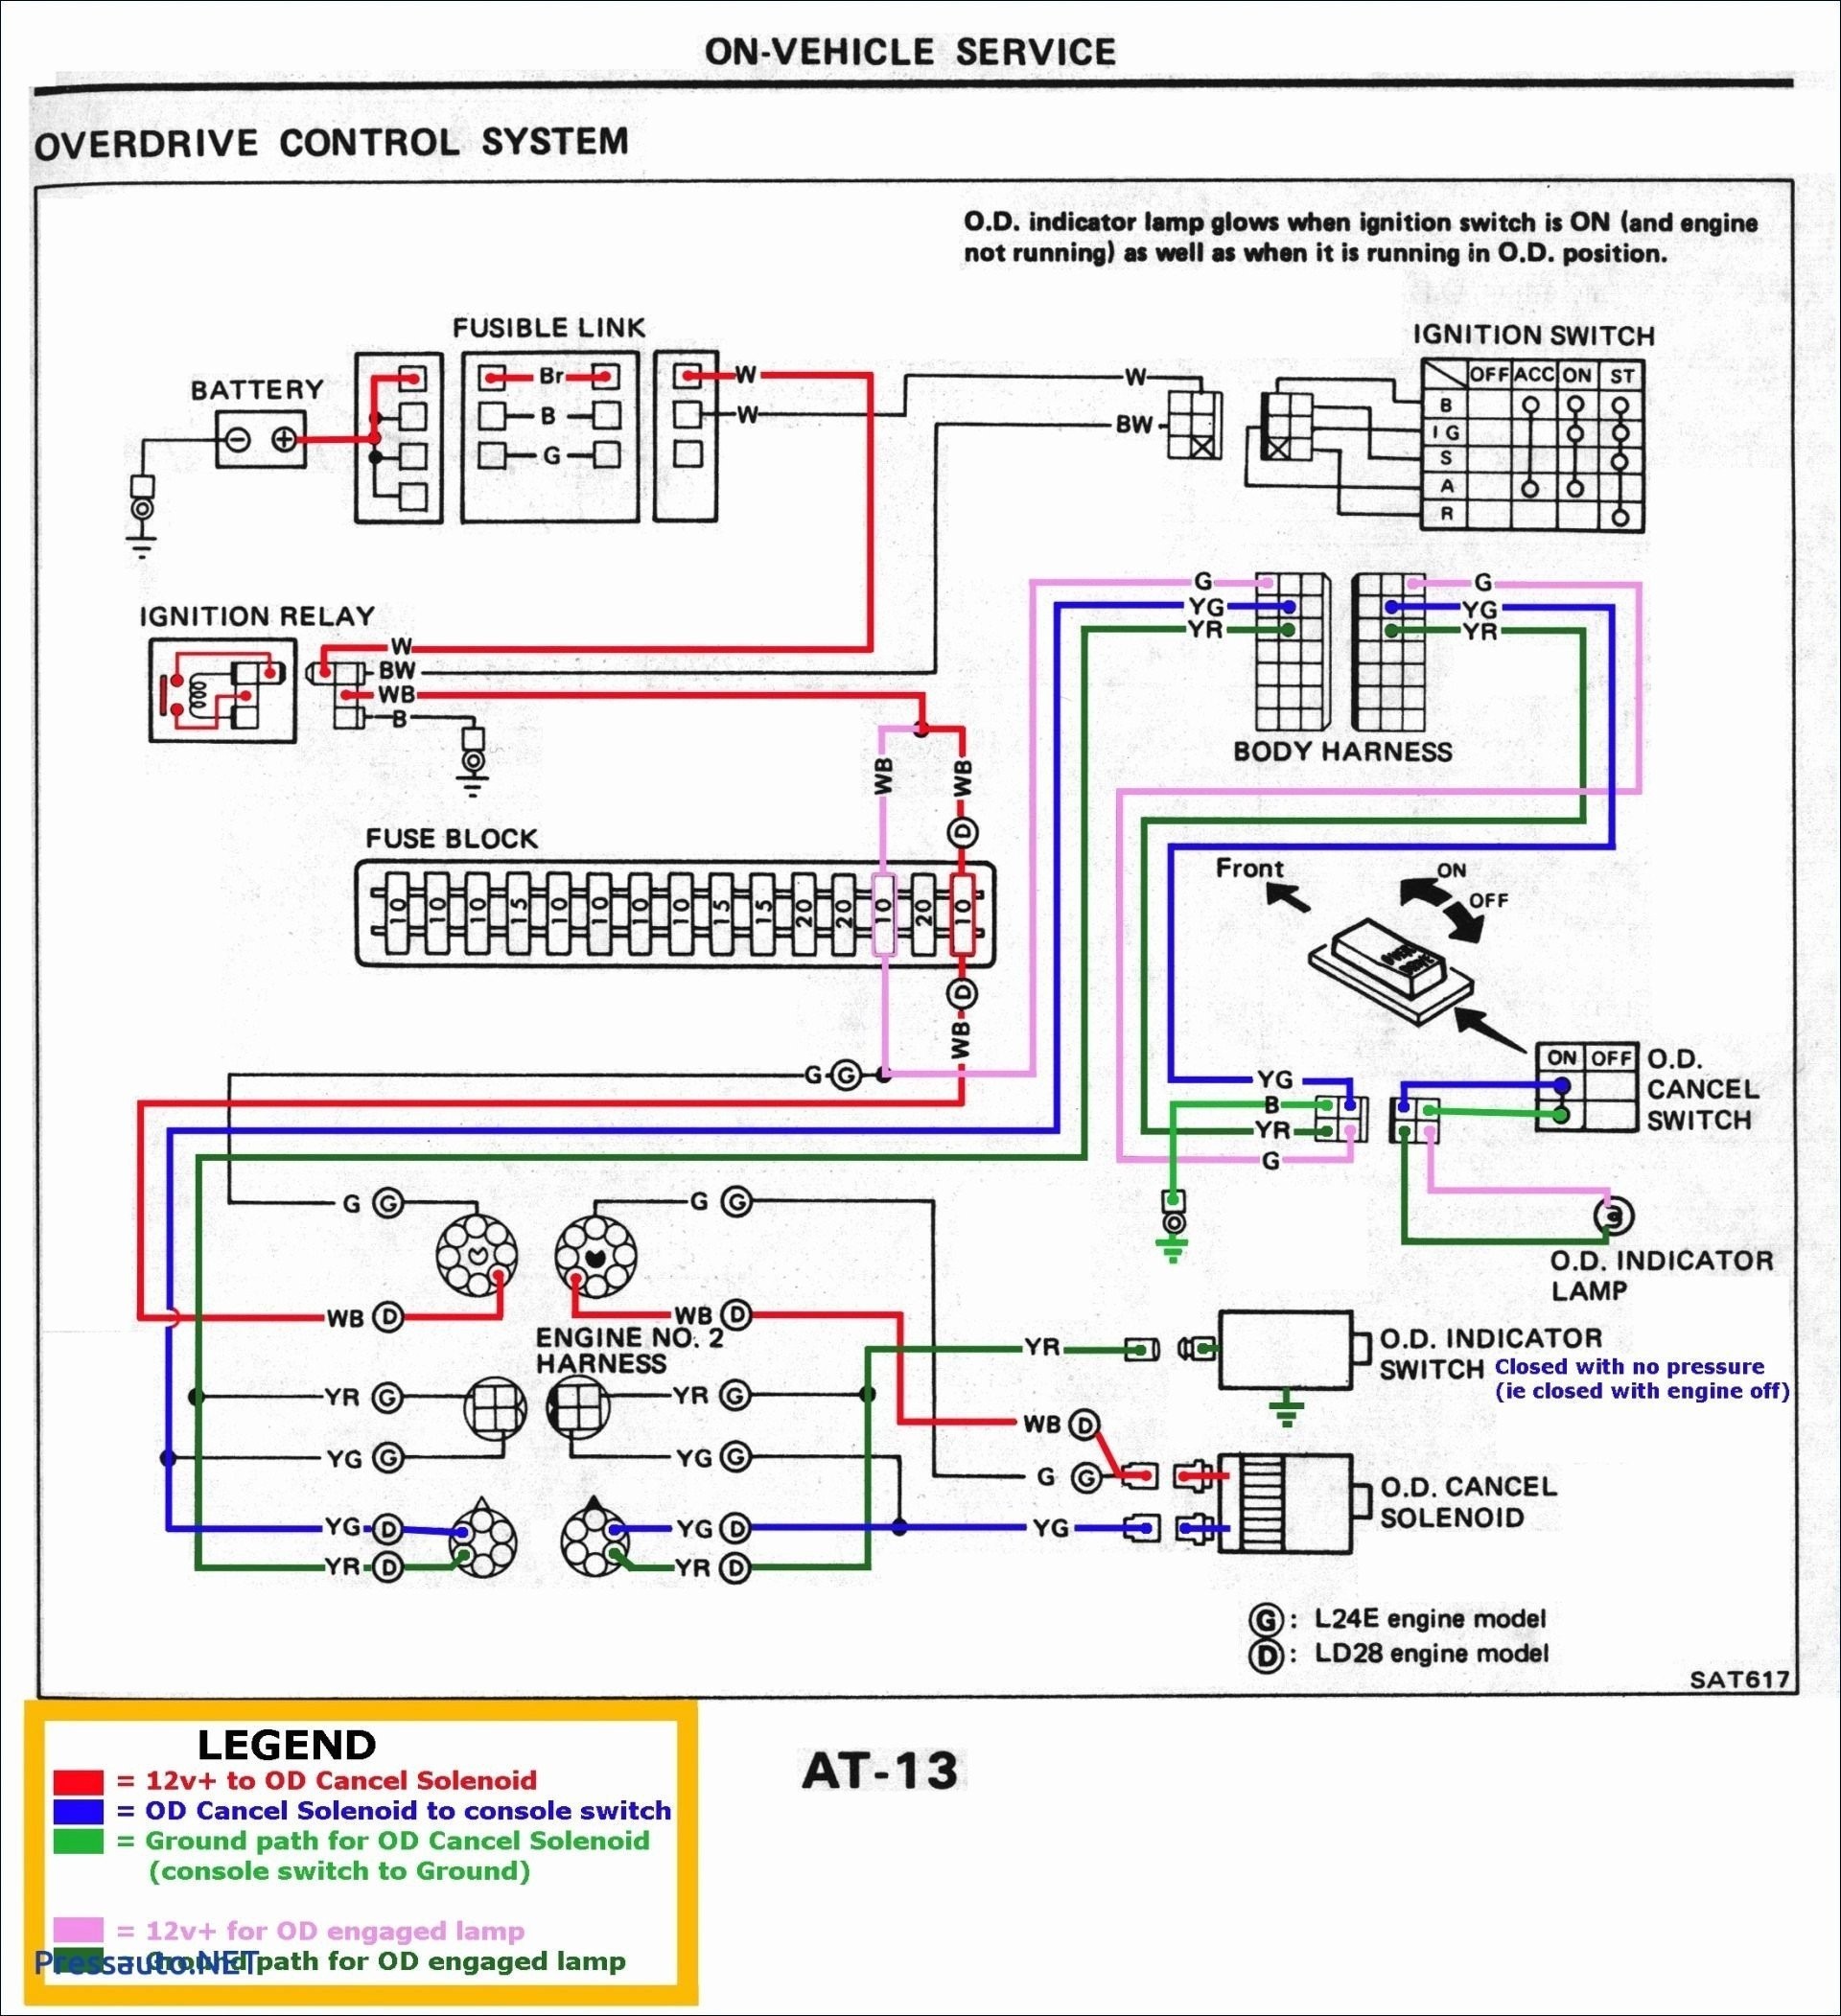 Schematic Diagram Of Heat Engine E8675 Jeep Wrangler Engine Wiring for 2000 Of Schematic Diagram Of Heat Engine